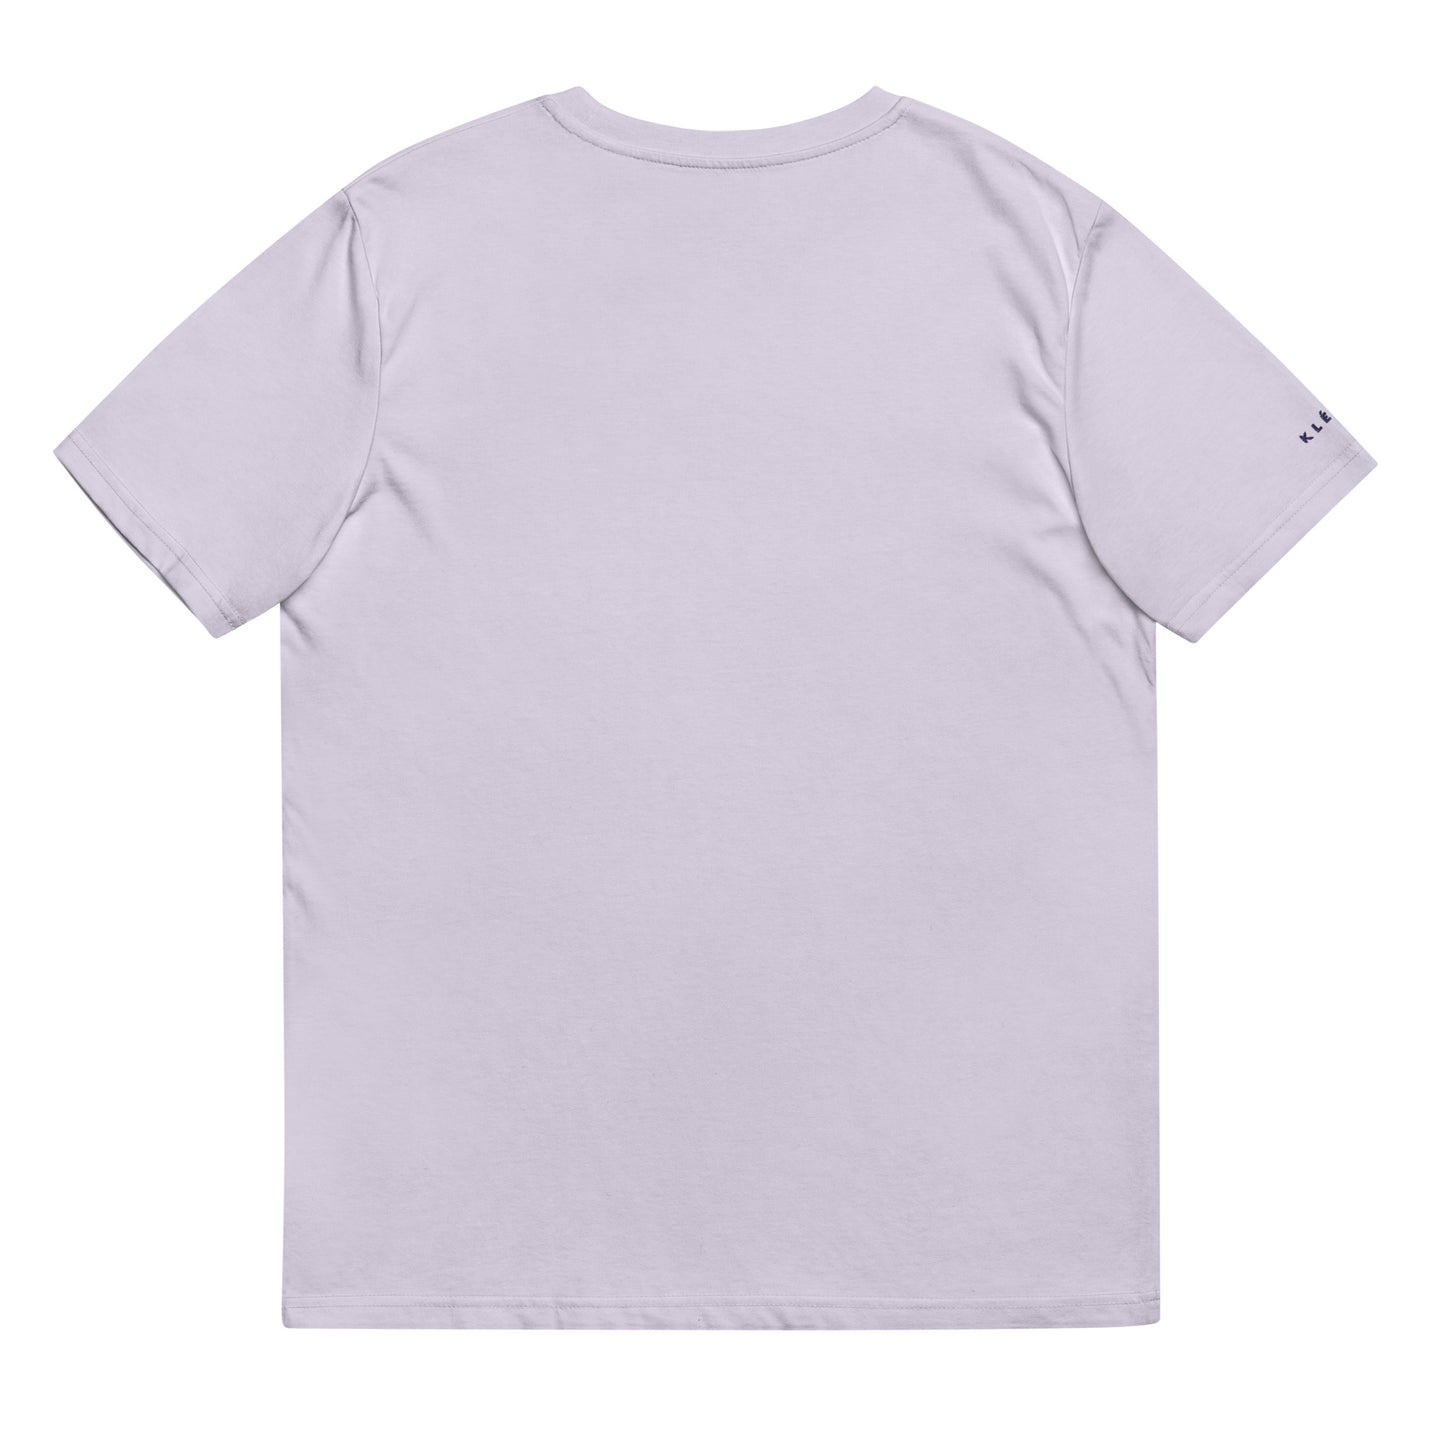 Klediq T-shirt / Lavender